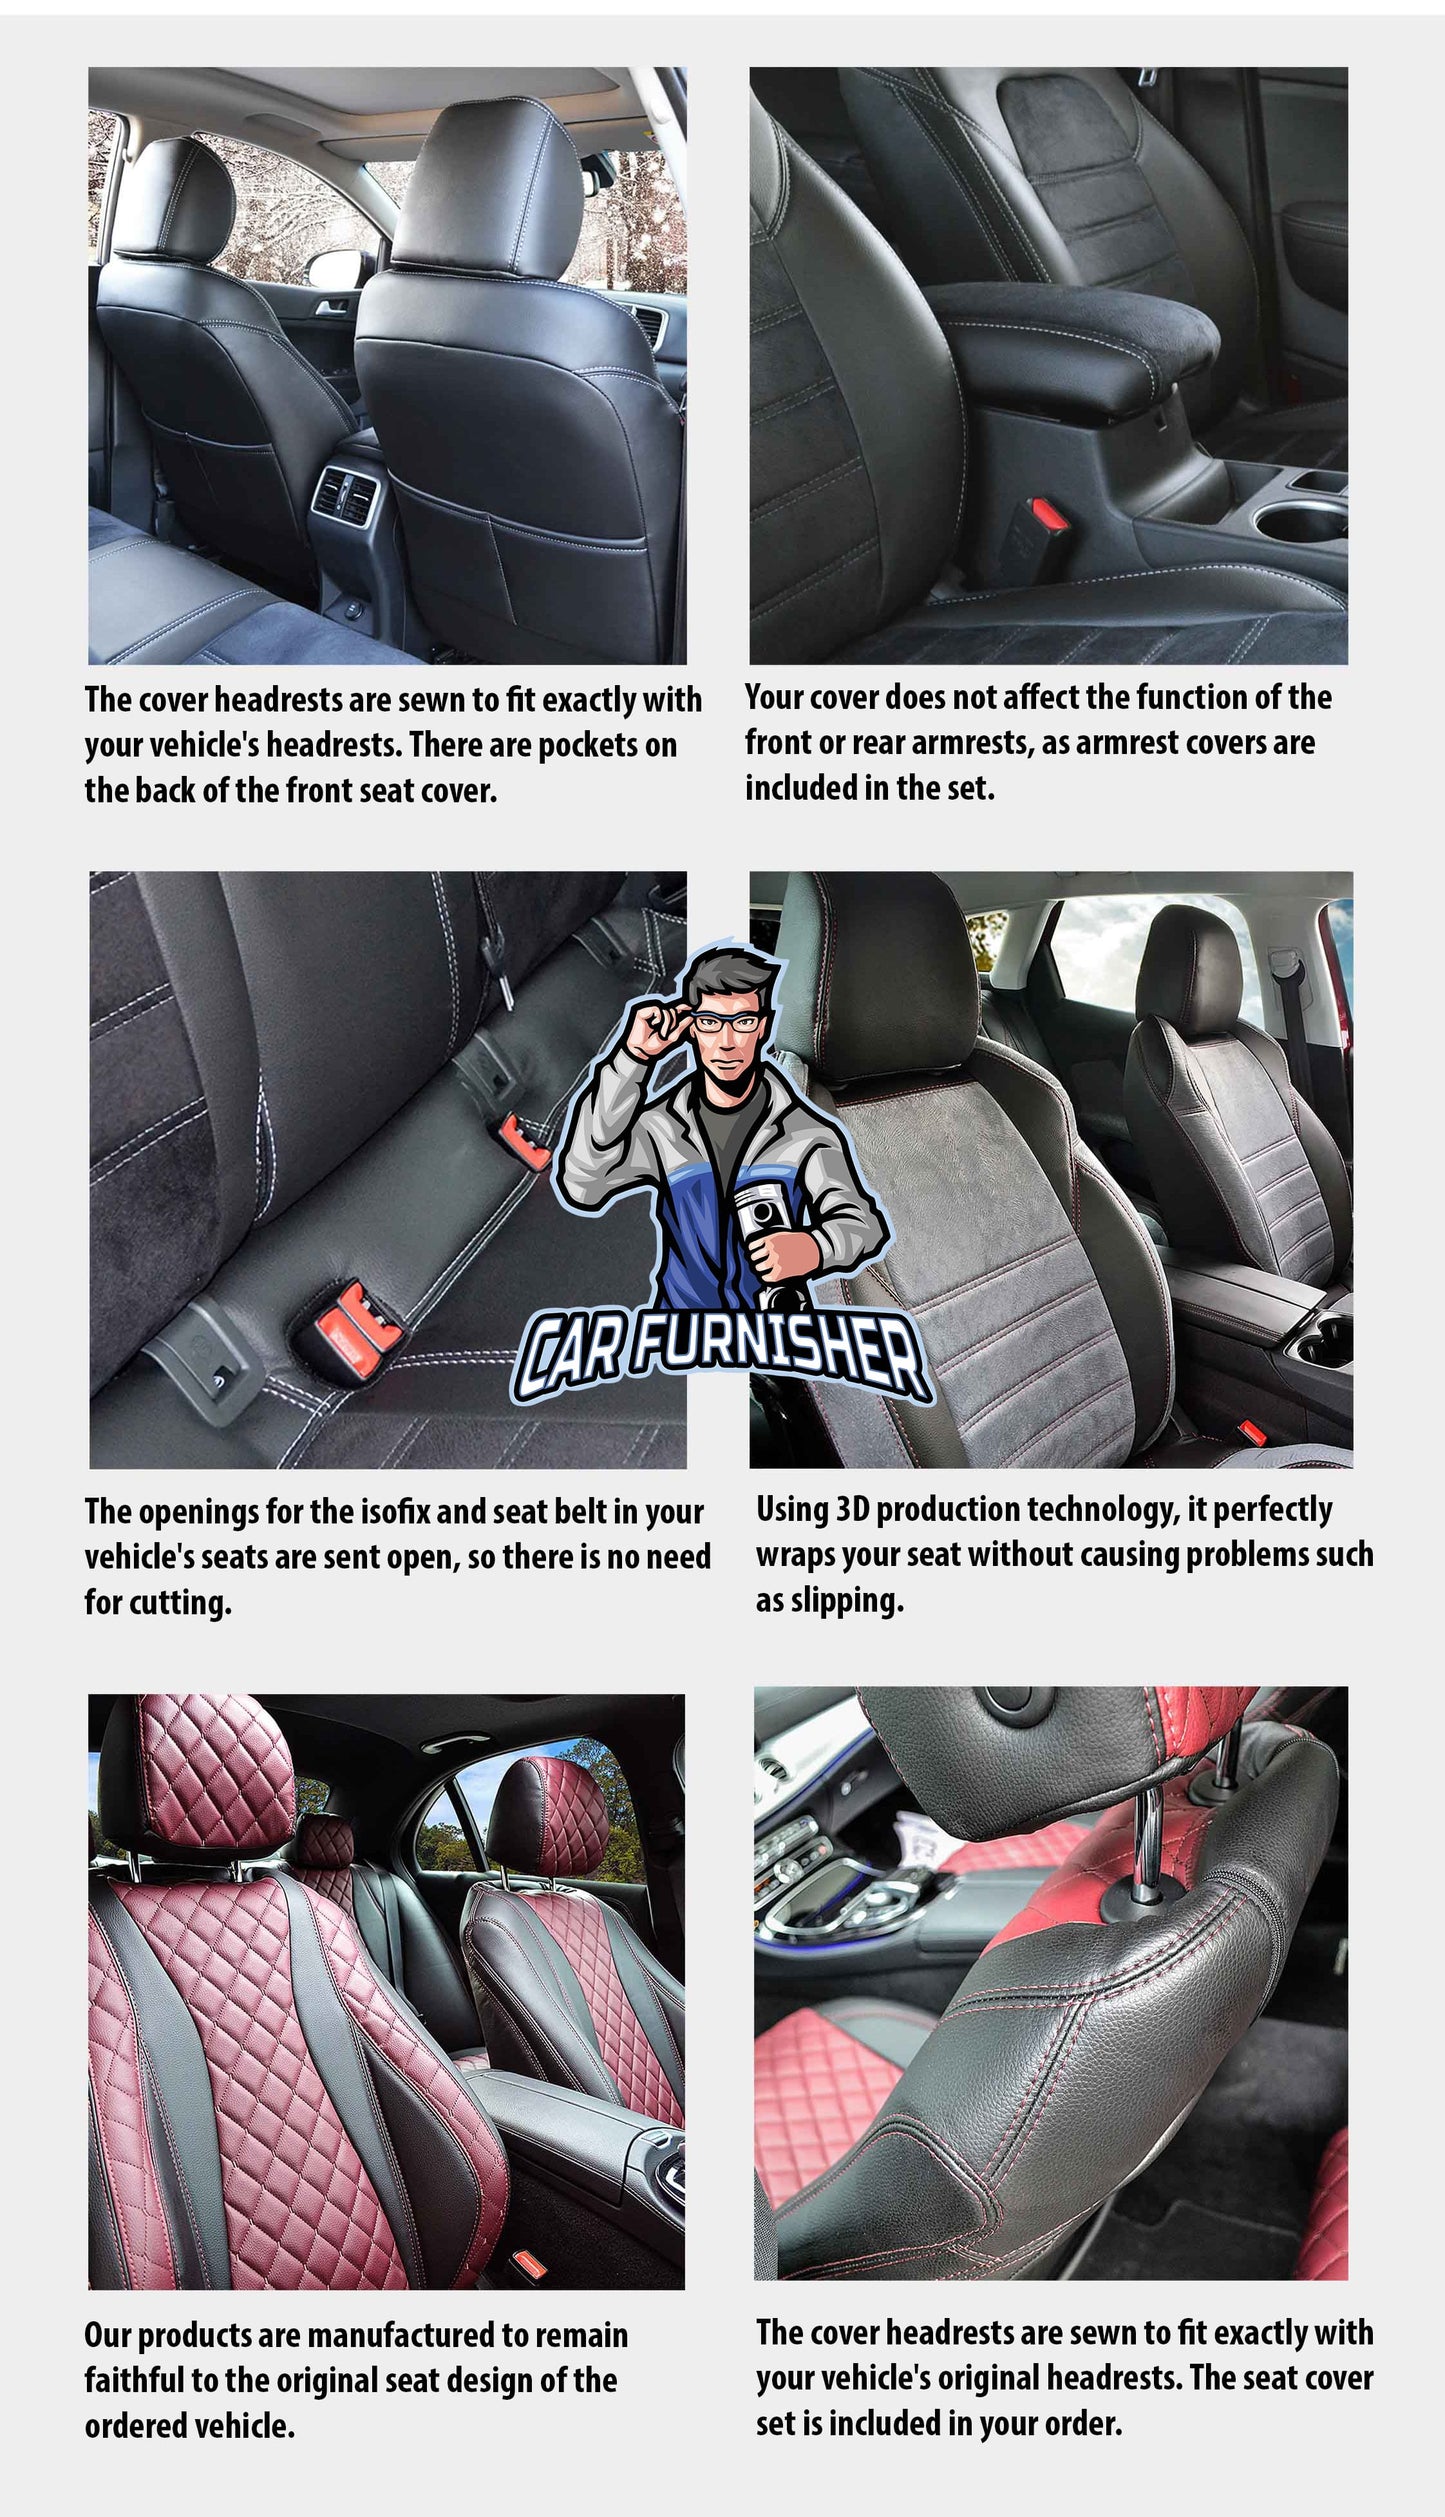 Citroen C2 Seat Covers Paris Leather & Jacquard Design Gray Leather & Jacquard Fabric